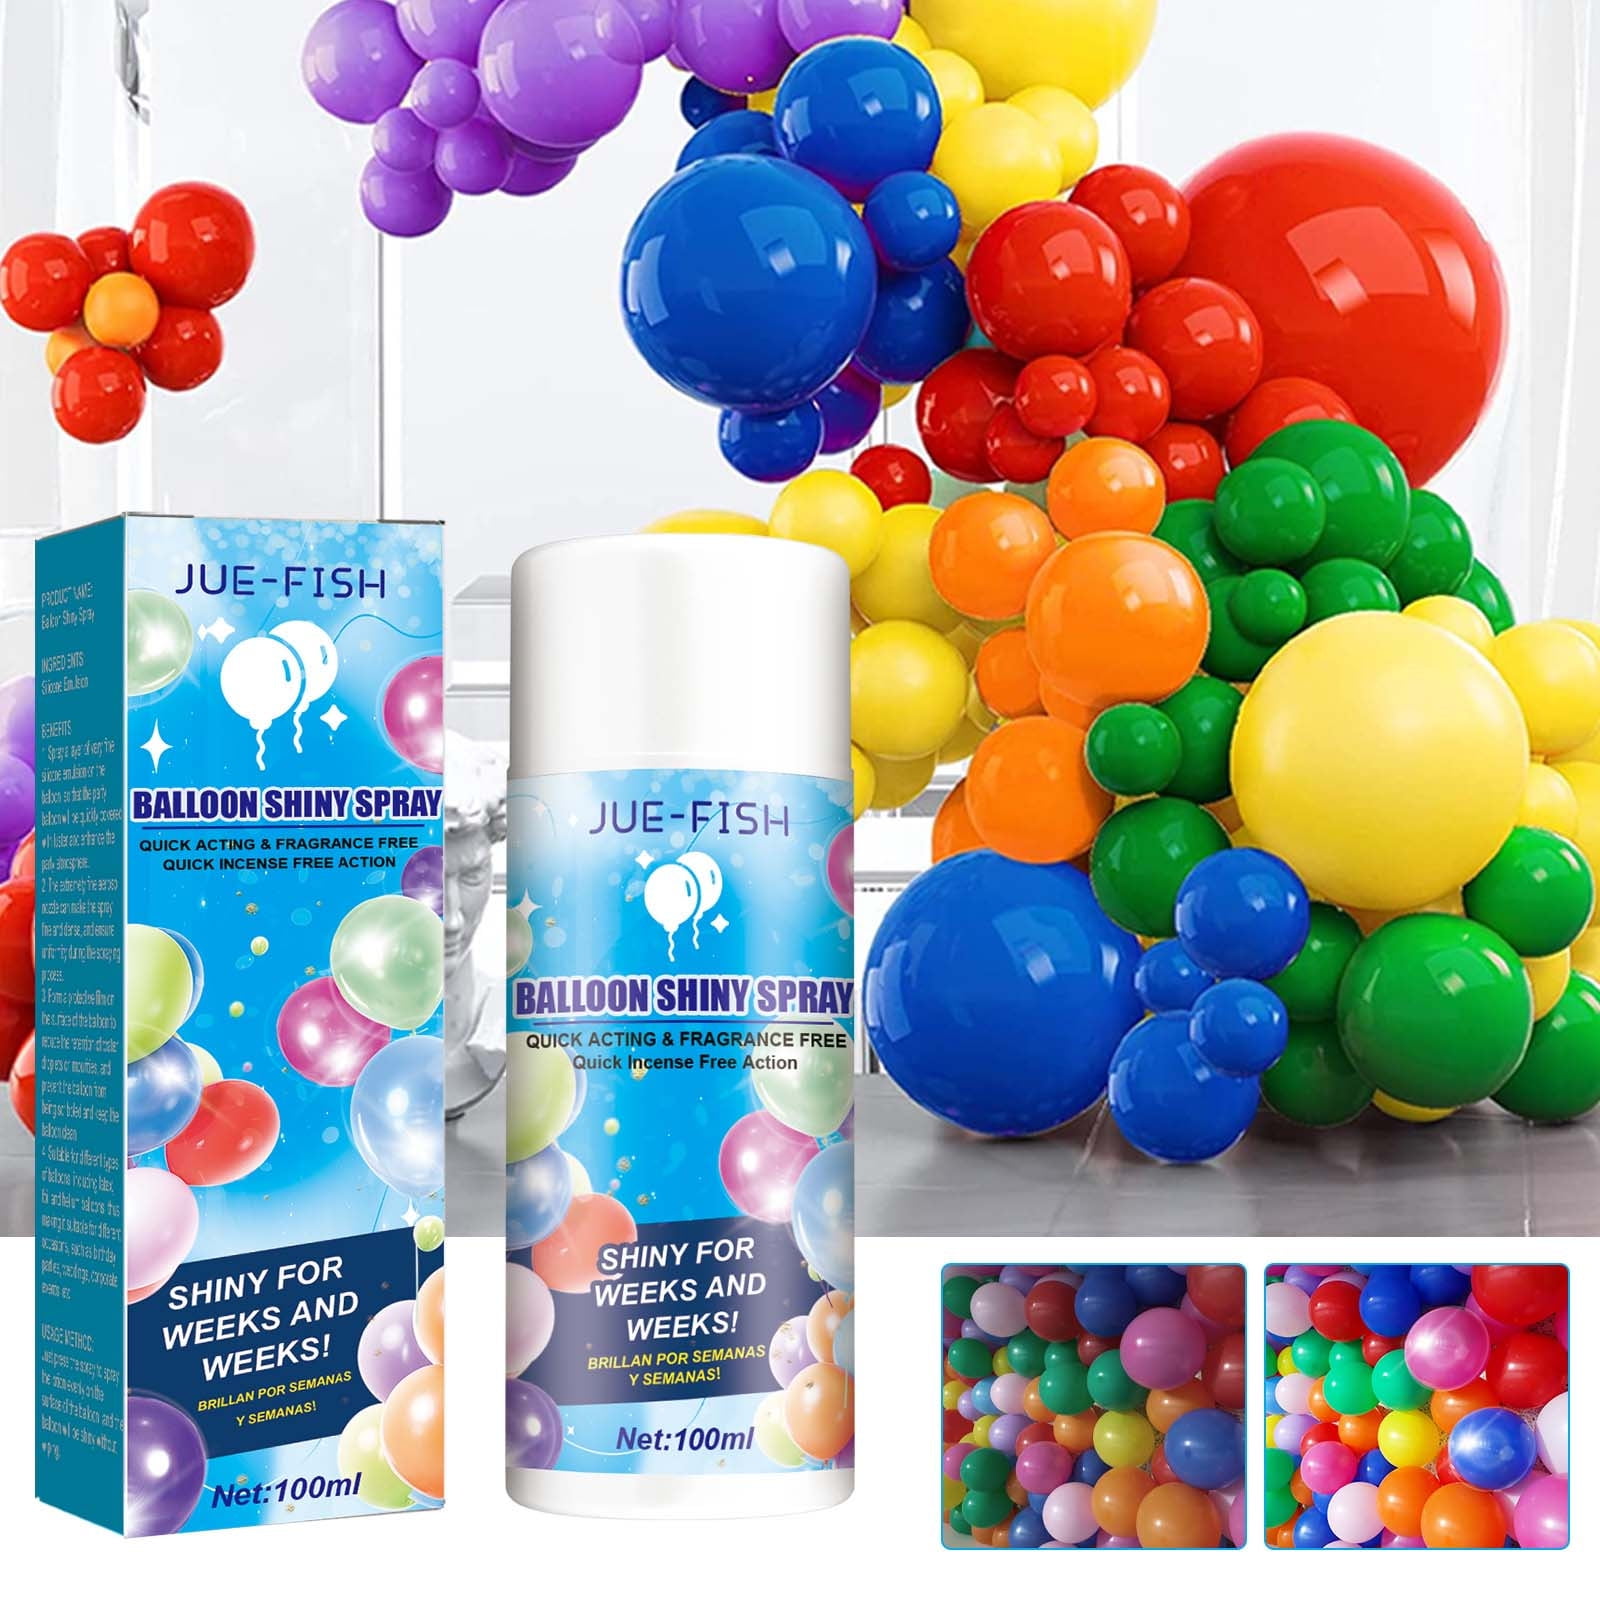 HI-SHINE Balloon Aerosol Spray 12oz: Precise Mist, No Drips, Instant Gloss  - Enhance Decor for Birthdays, Weddings, Events - Quick Apply, Lasting